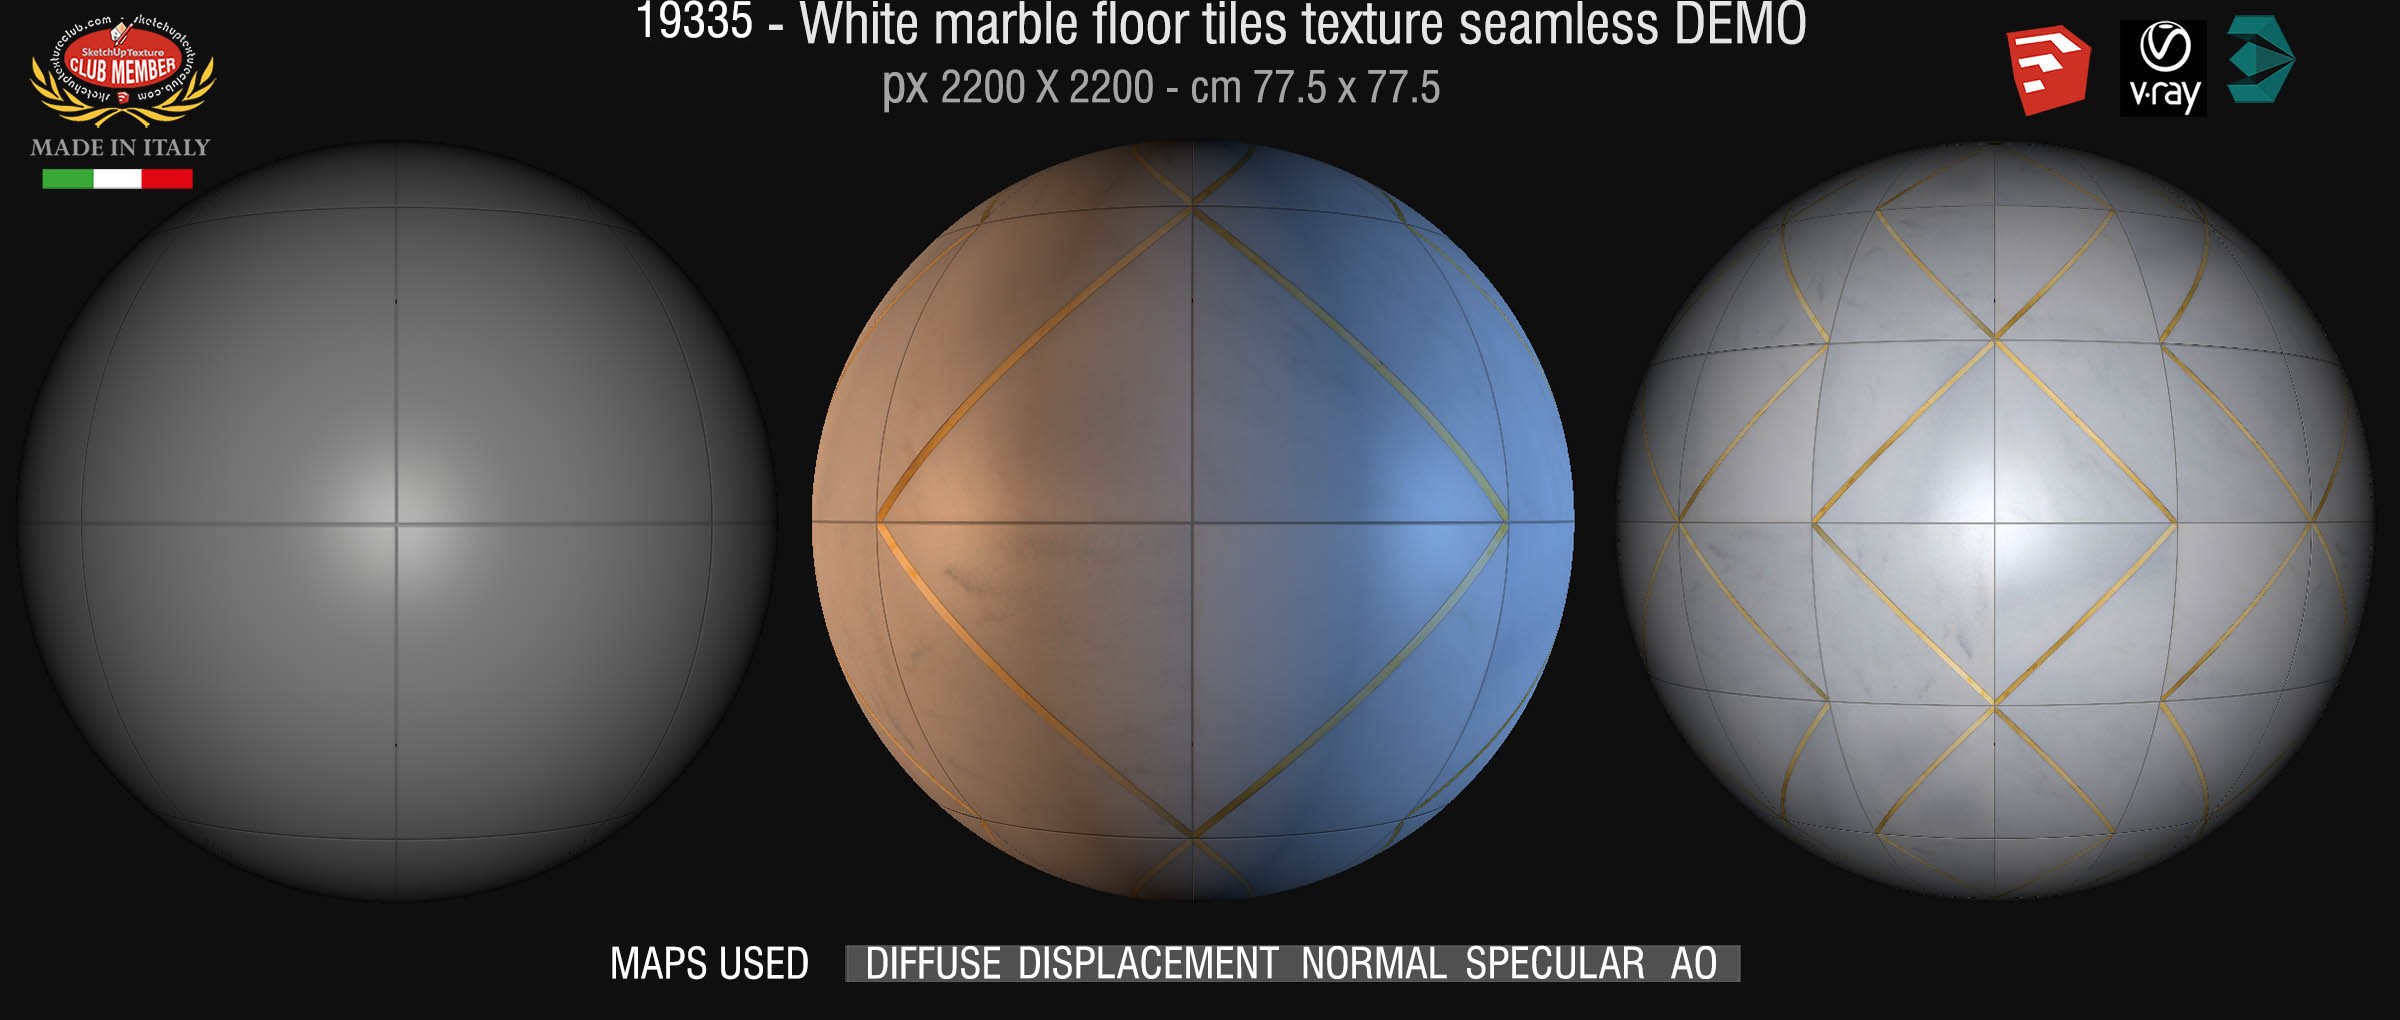 19335 Geometric pattern white marble floor tile texture seamless + maps DEMO